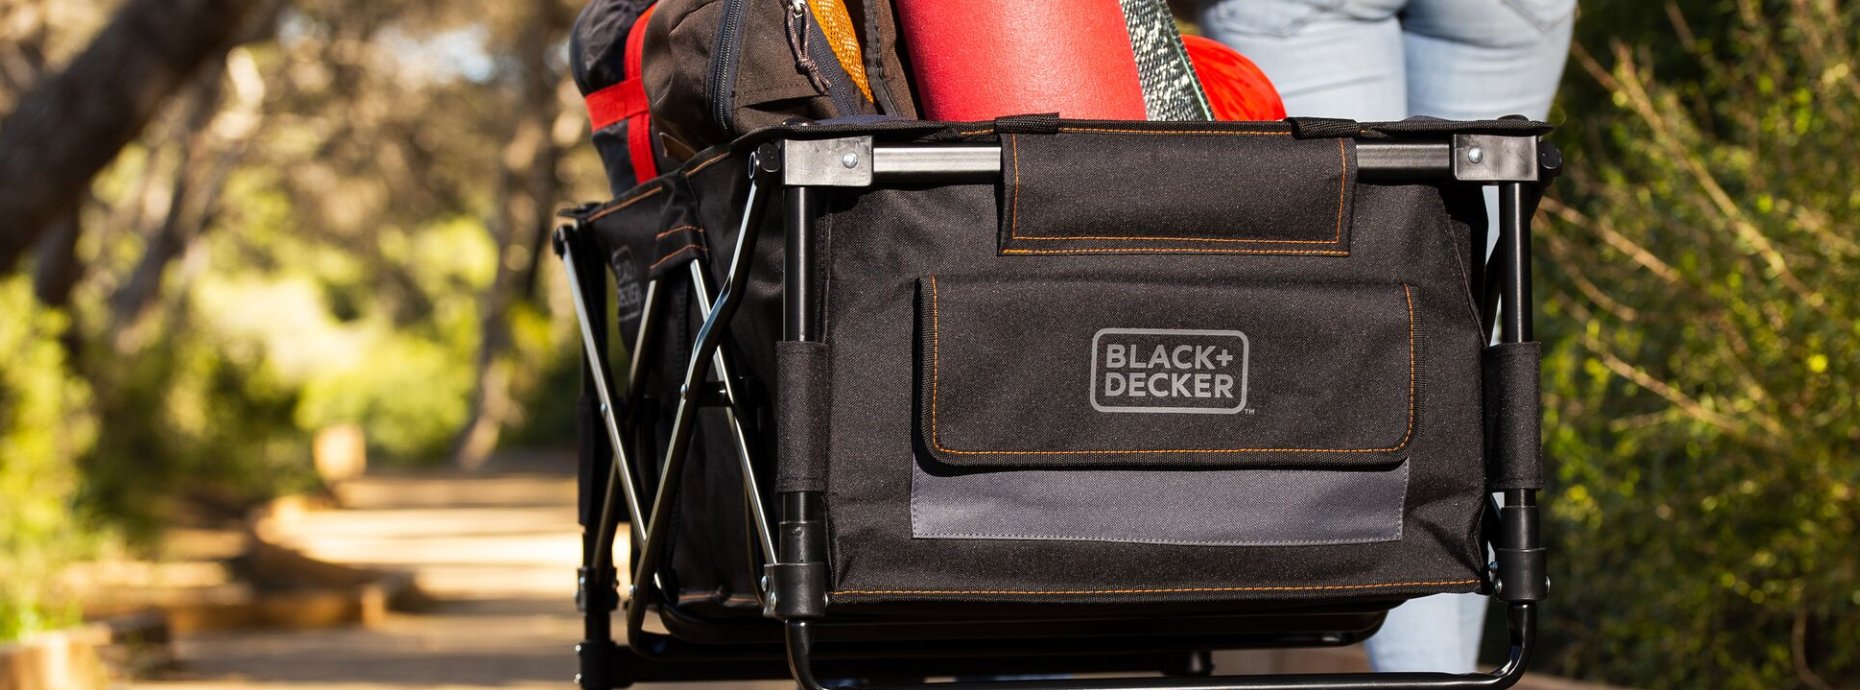 Beyond by Black+decker Tool Box & Organizer 16-inch 10-Compartment (BDST60096AEV)